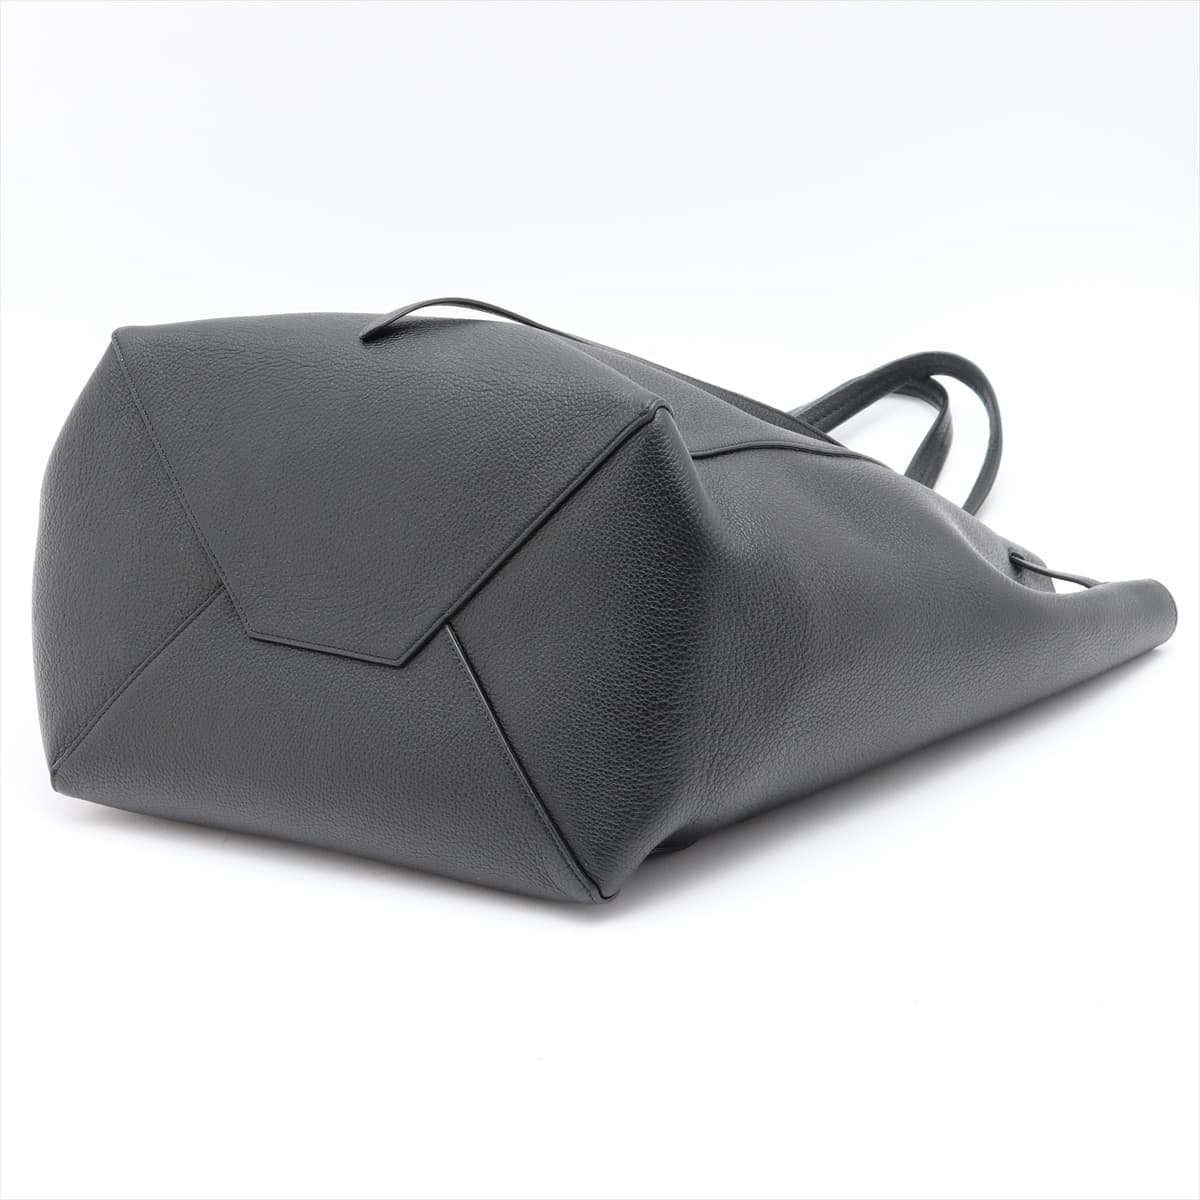 CELINE Cabas Phantom Leather Tote bag Black